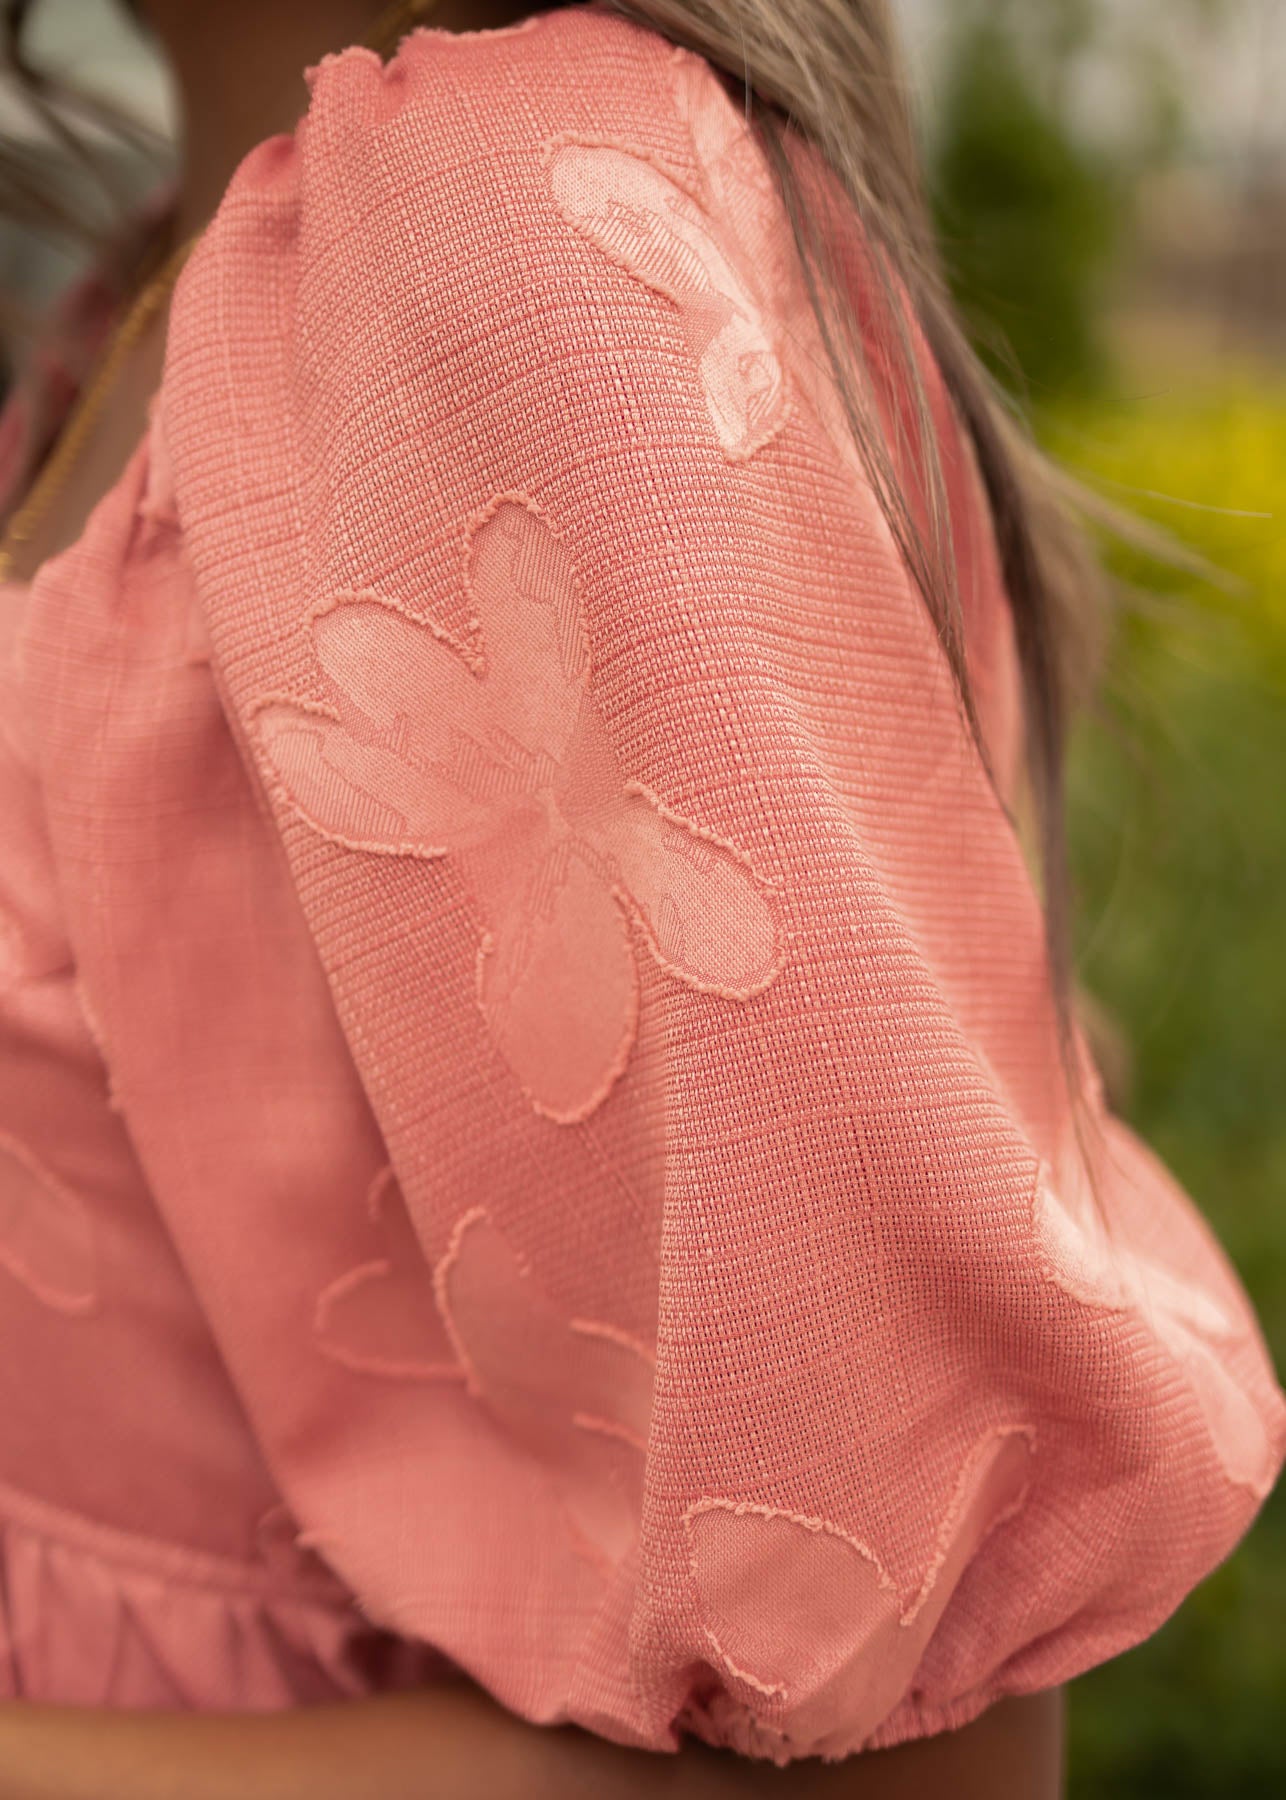 Fabric pattern of a dusty rose dress